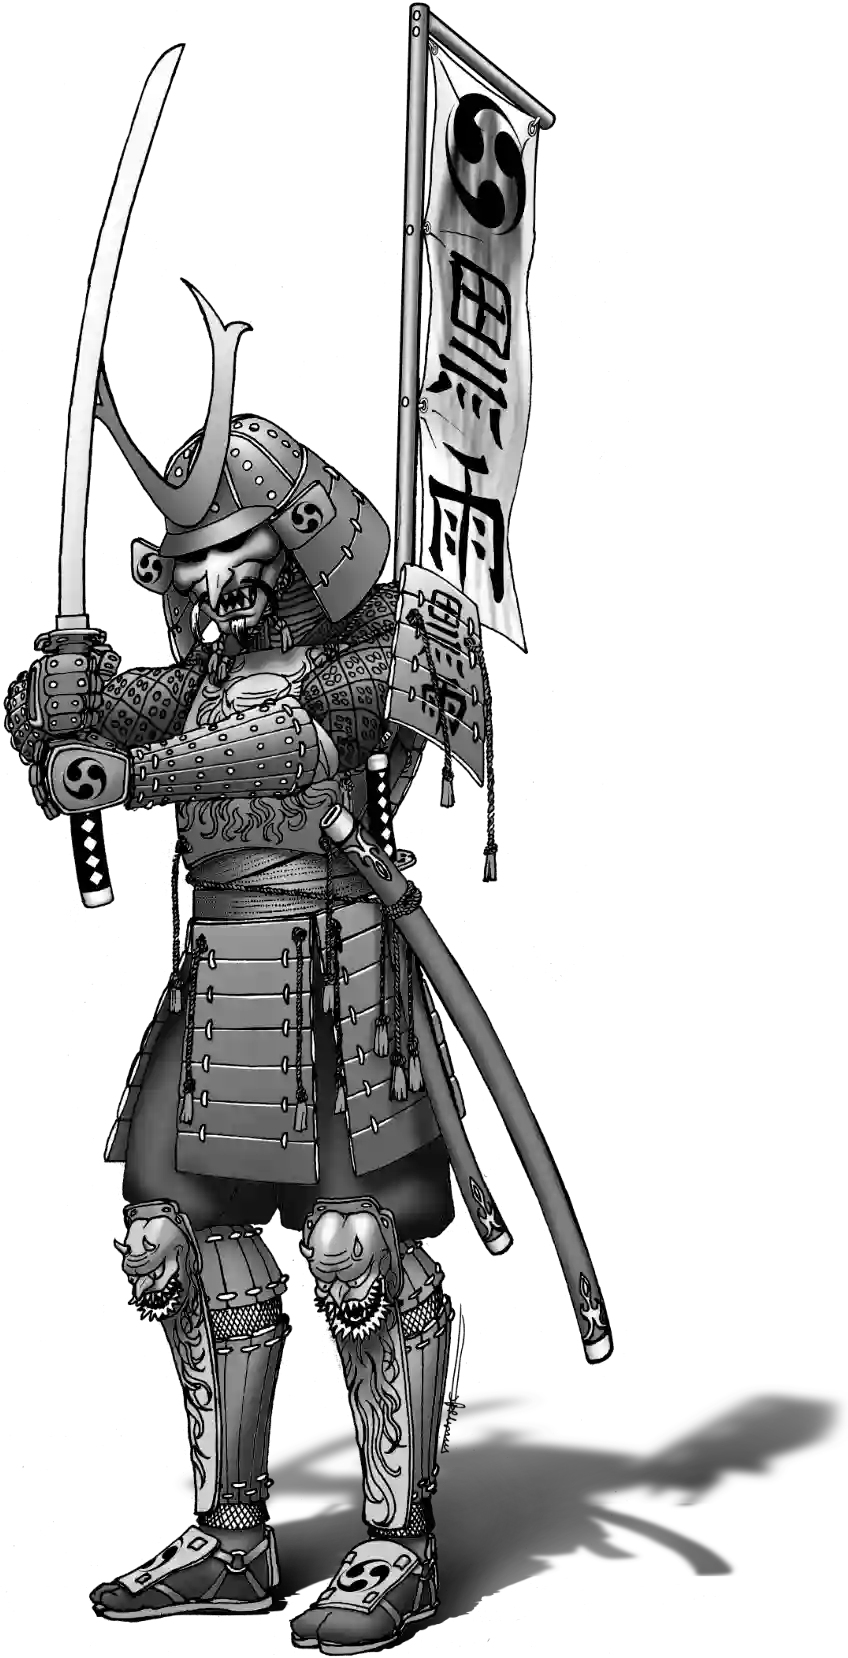 A samurai ready to fight.